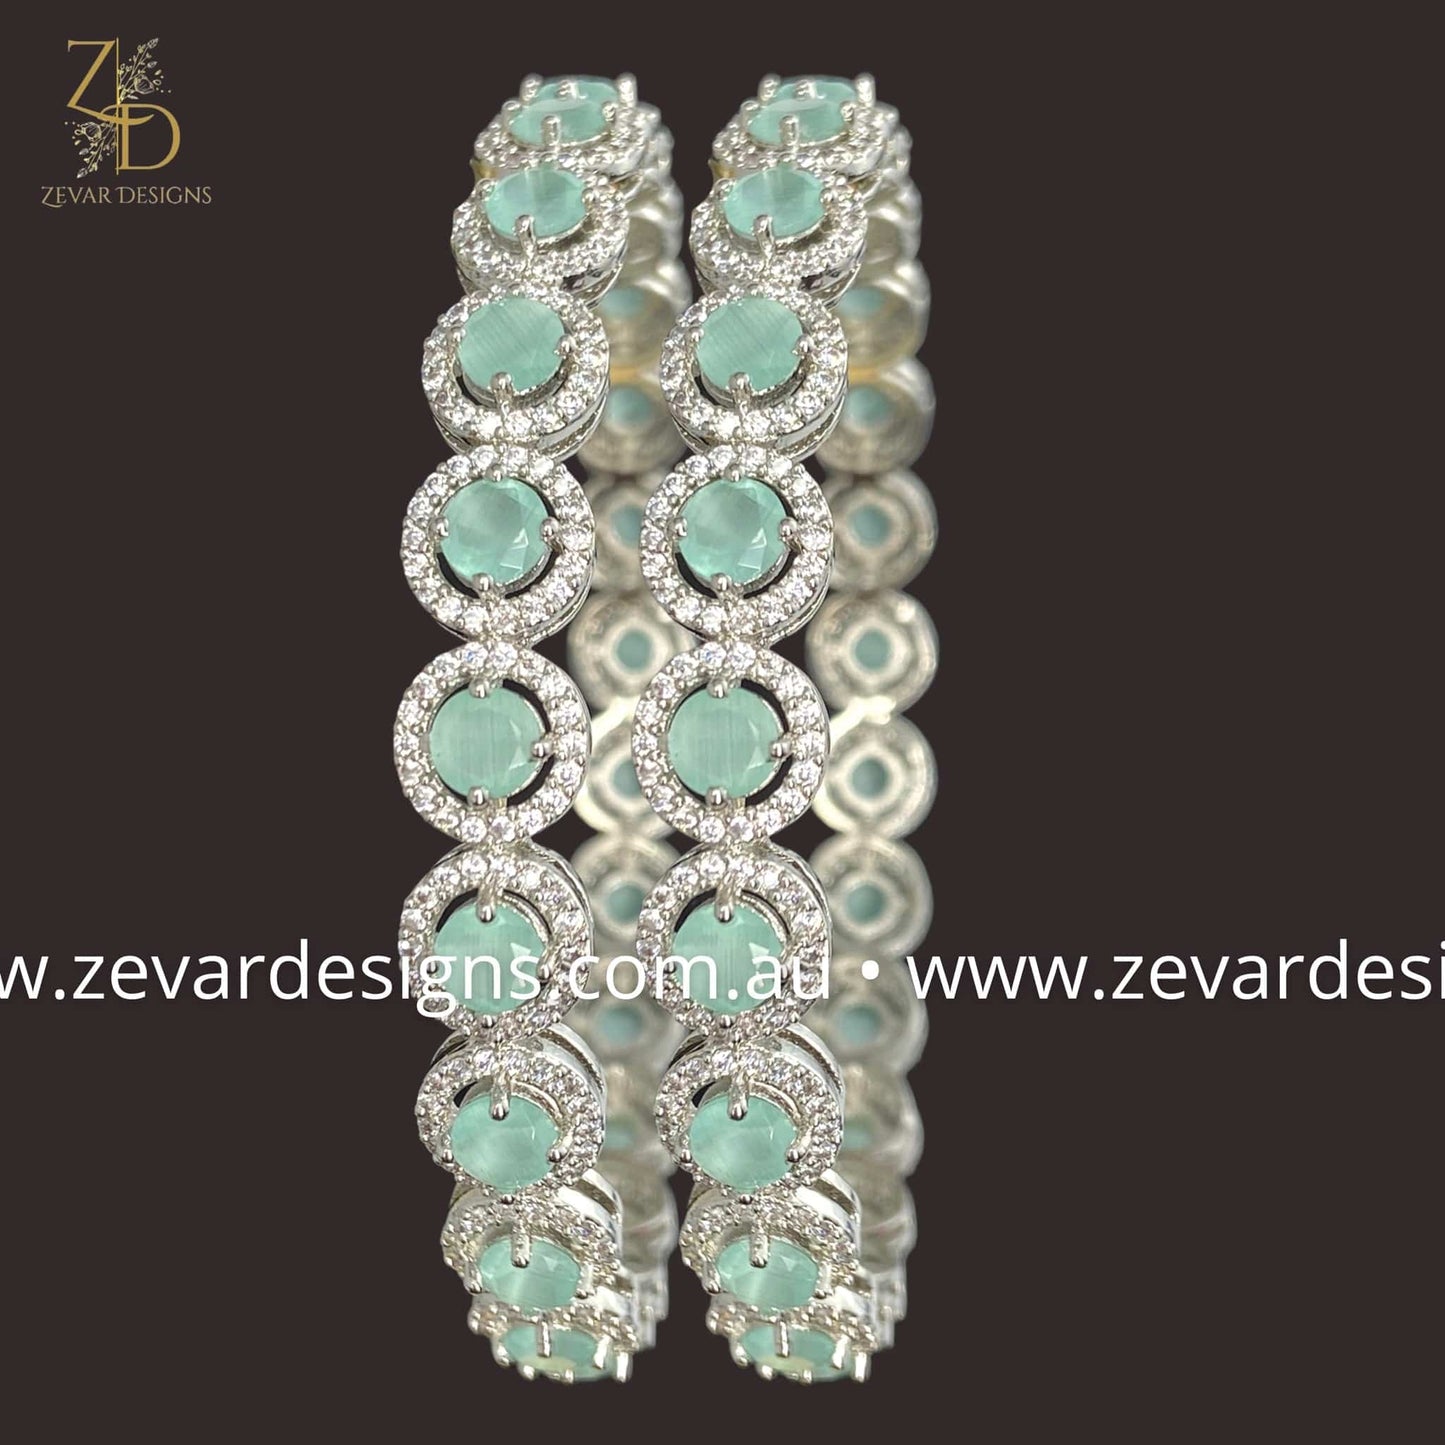 Zevar Designs Bangles & Bracelets - AD AD Bangles - Mint and White Rhodium